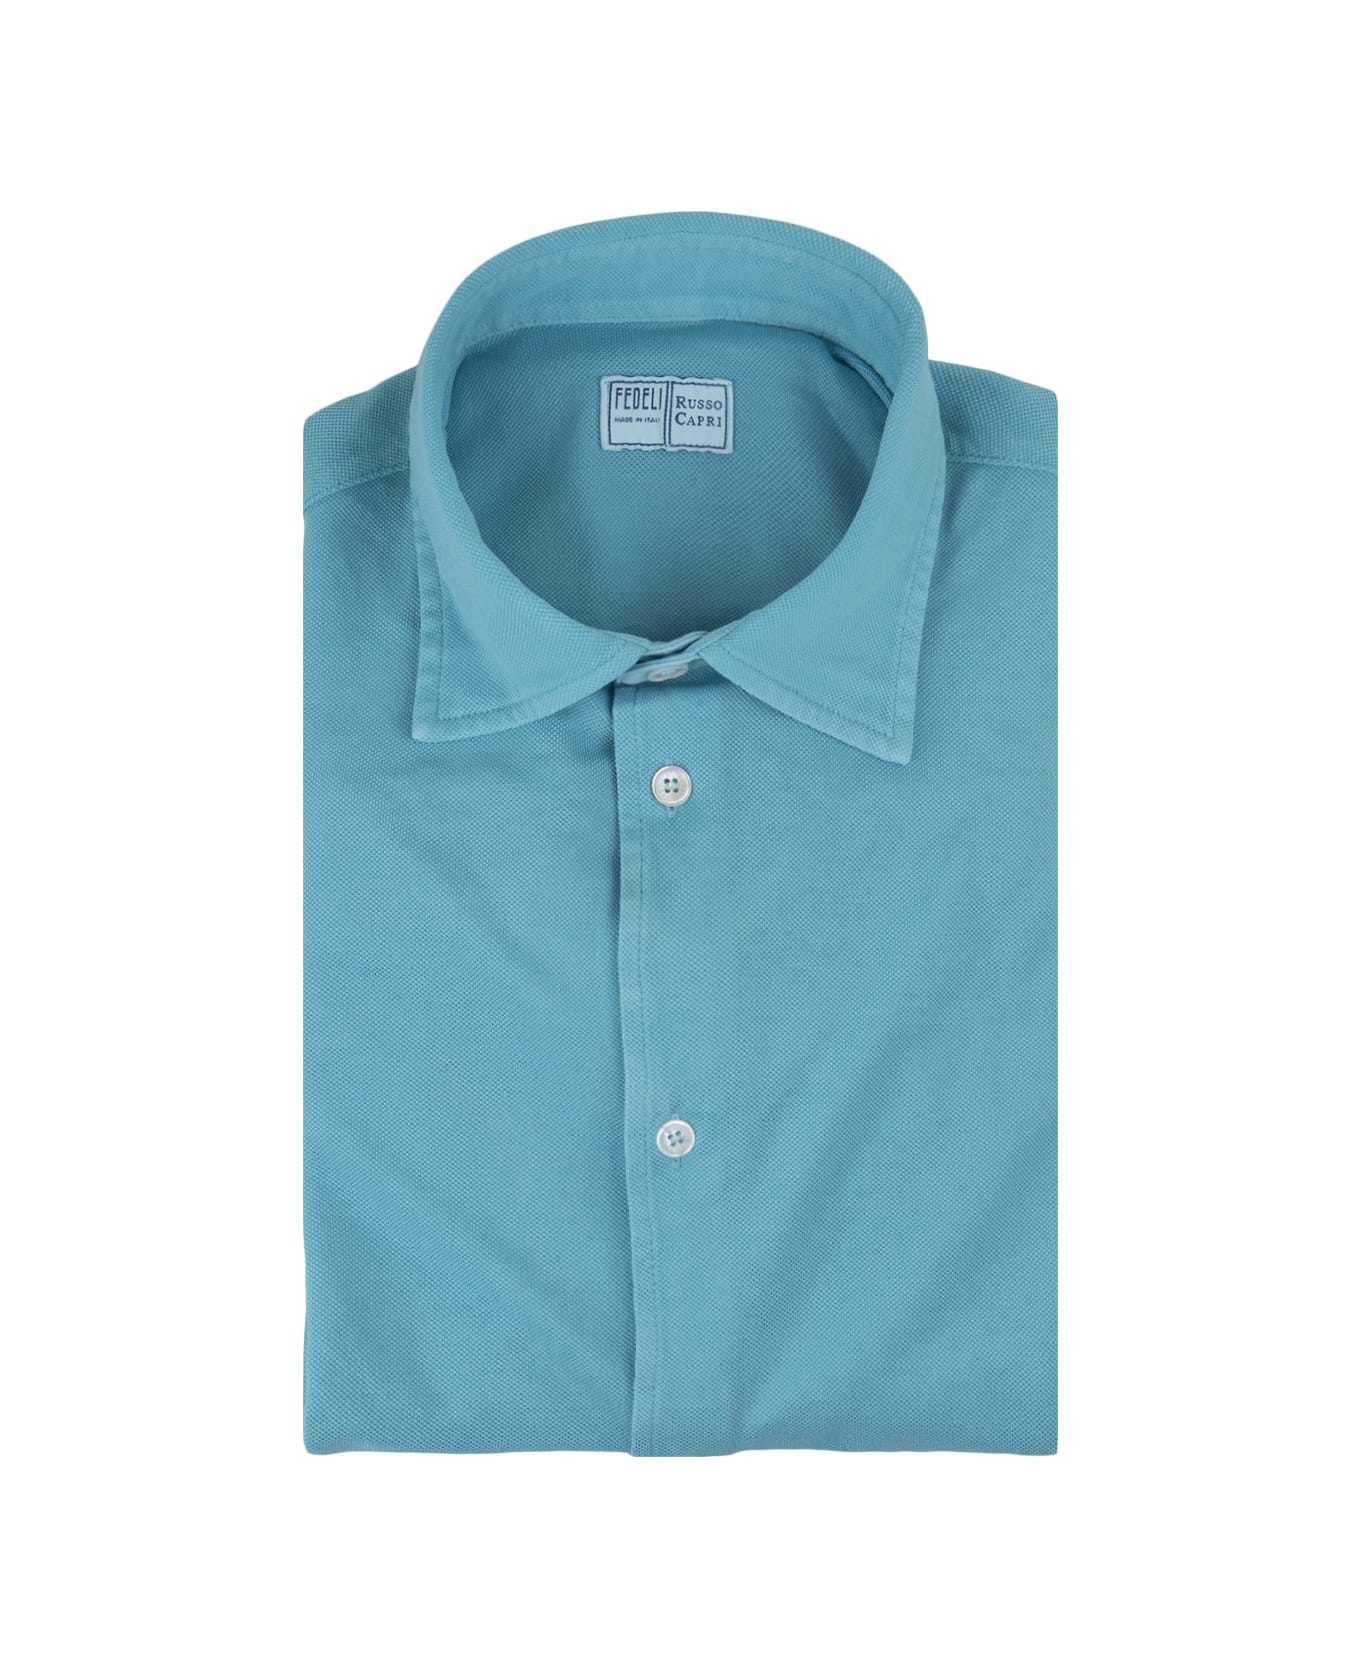 Fedeli Shirt In Turquoise Cotton Piqué - Blue シャツ